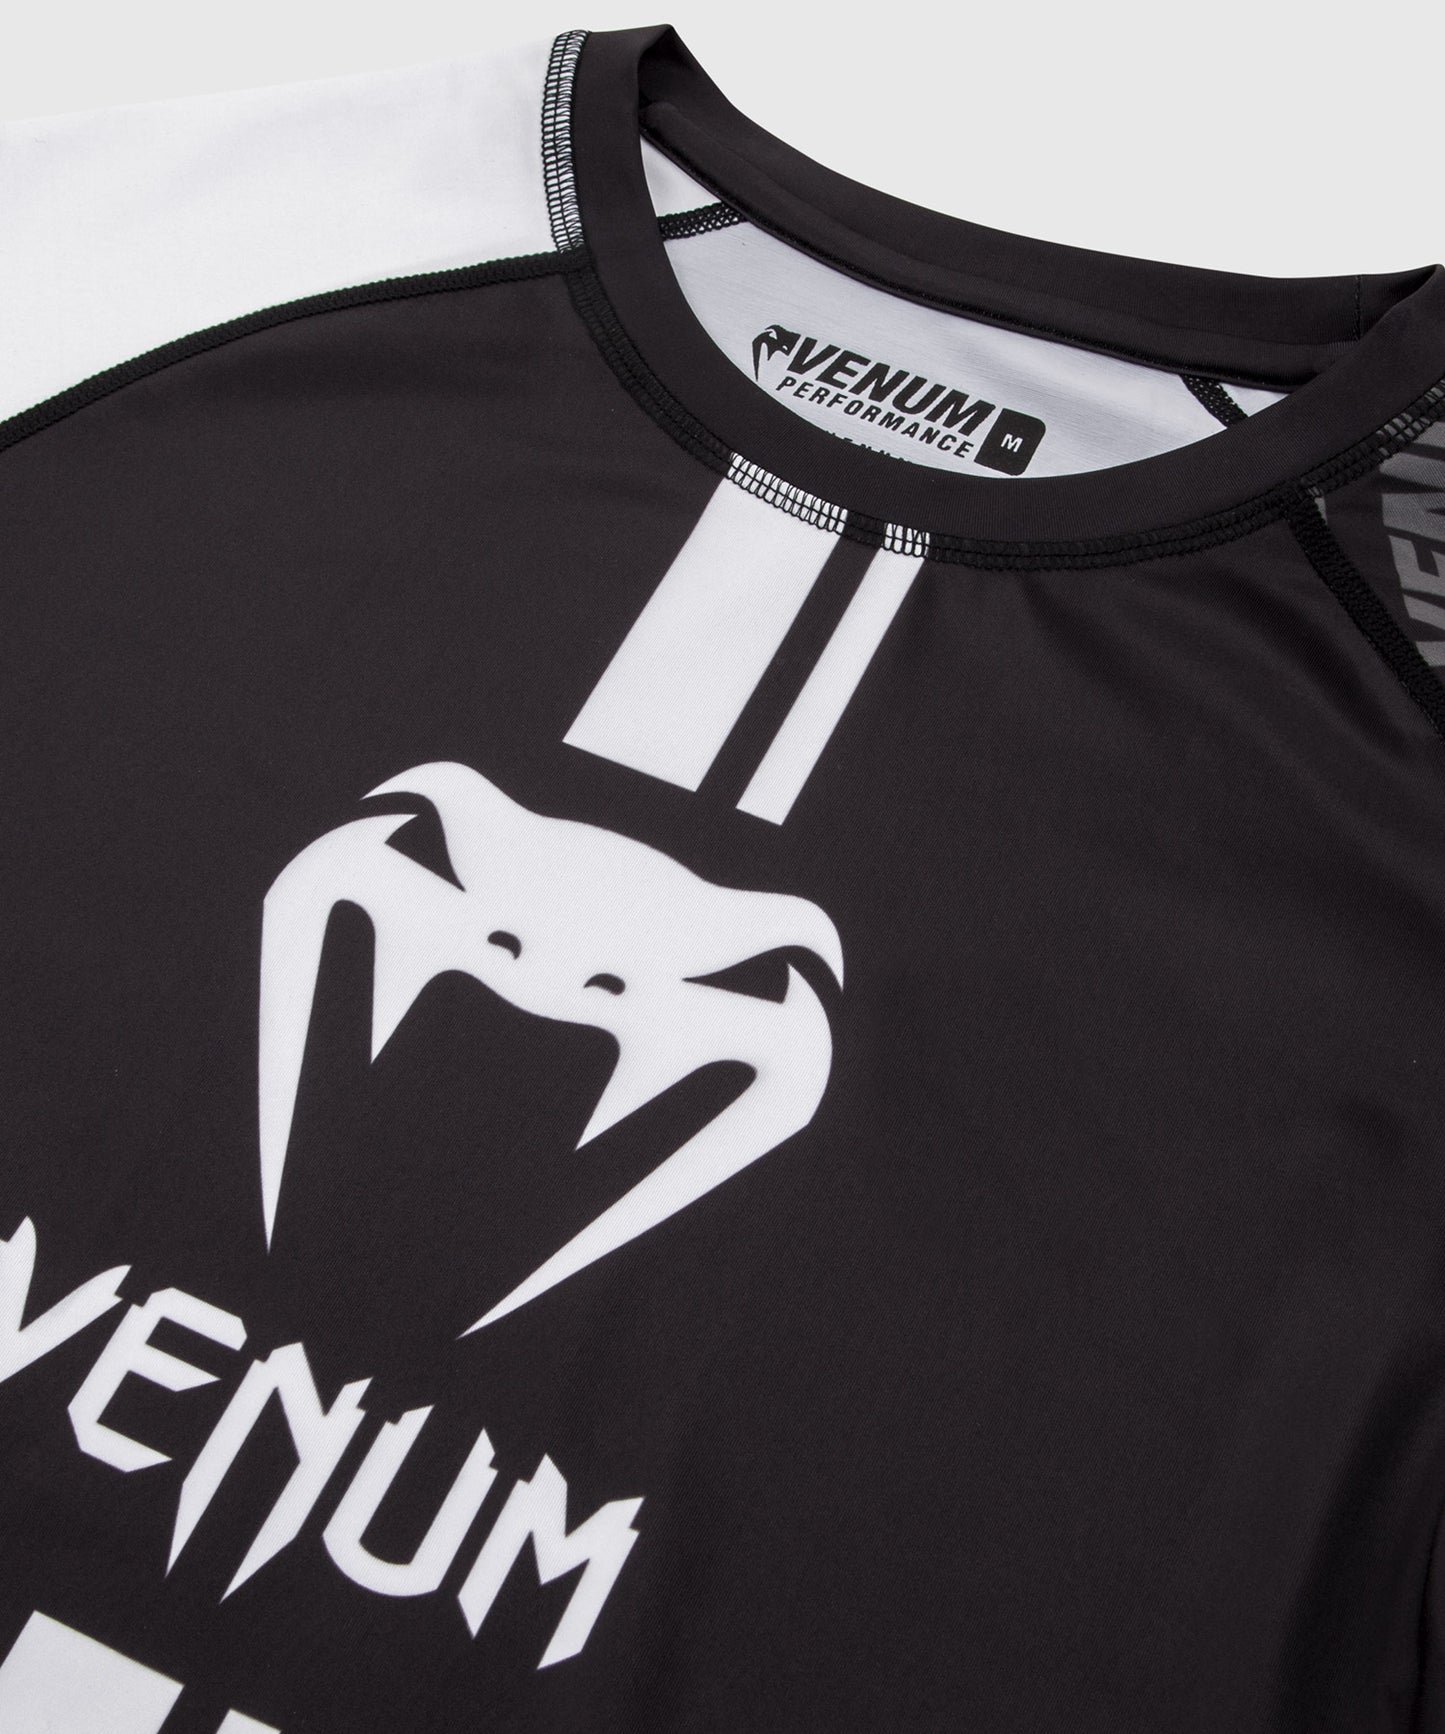 Venum Logos Rashguard Short Sleeves - Black/White